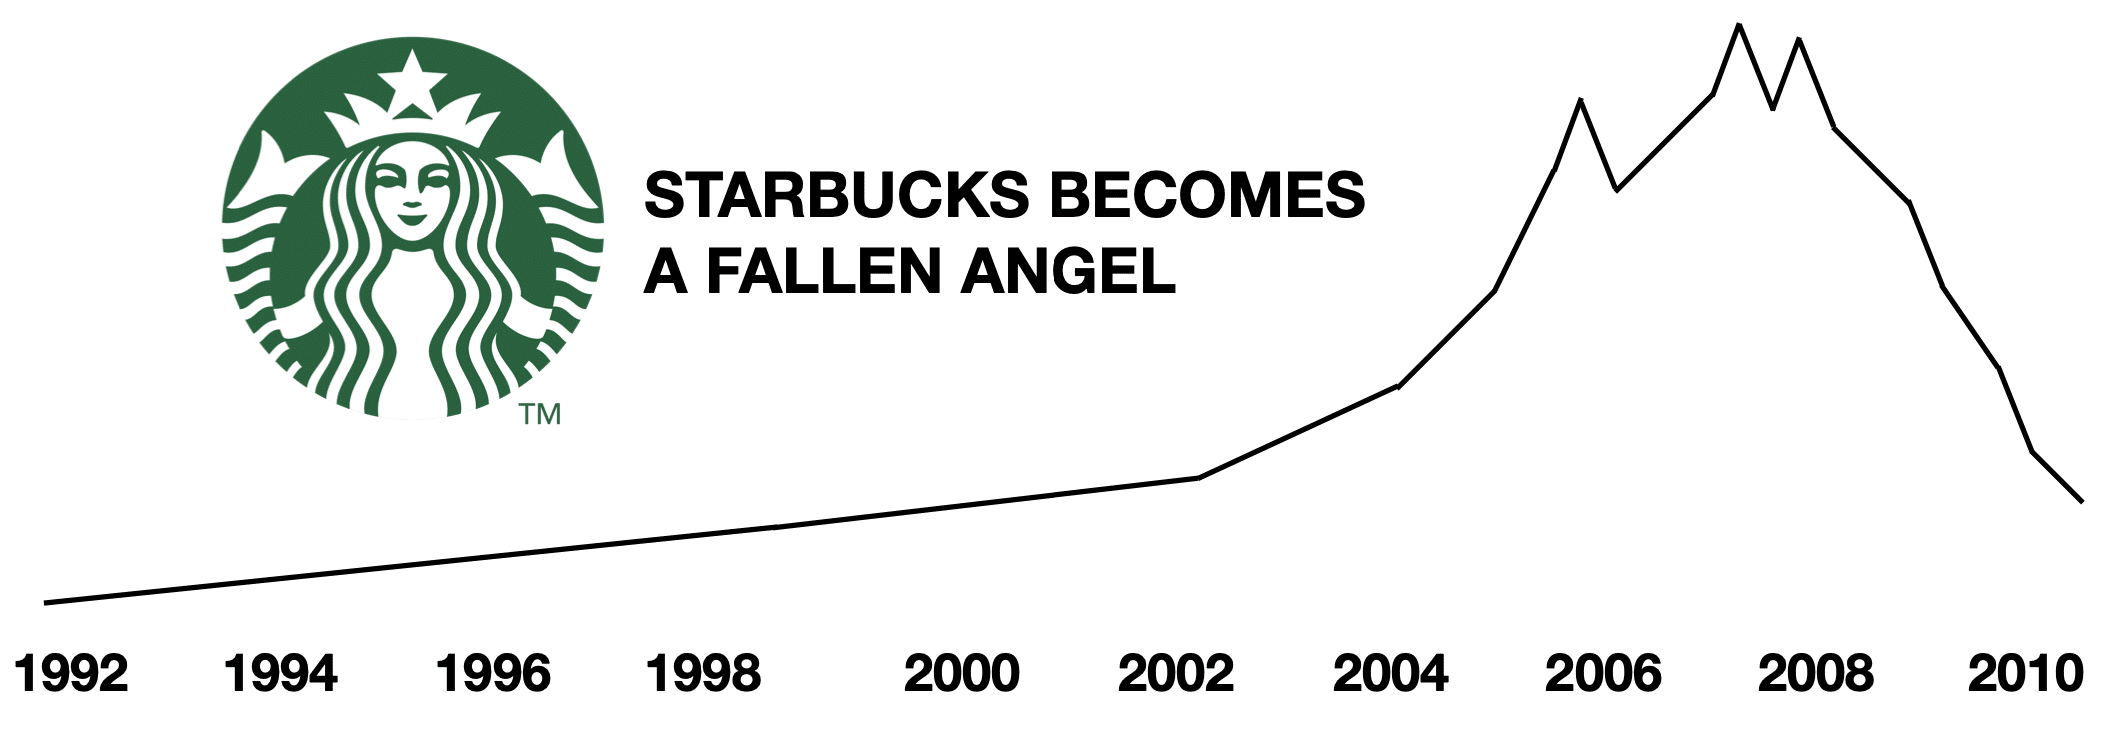 Starbucks results